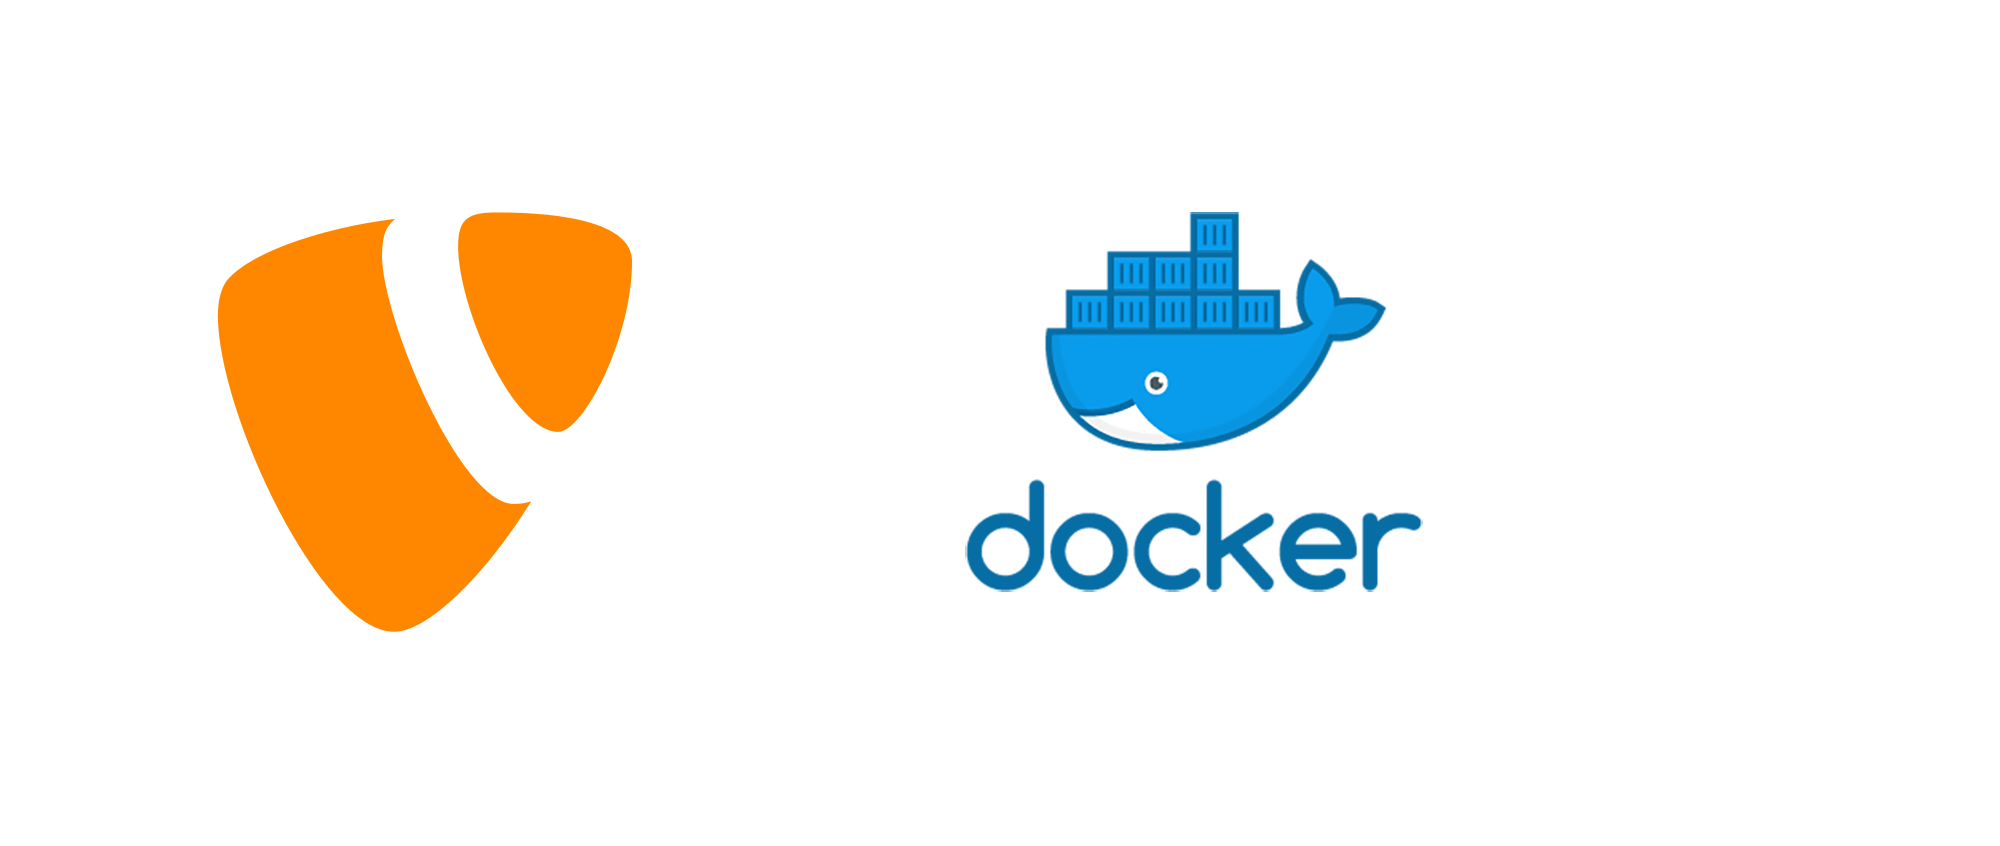 Докер Let it doc. Docker exec bin bash